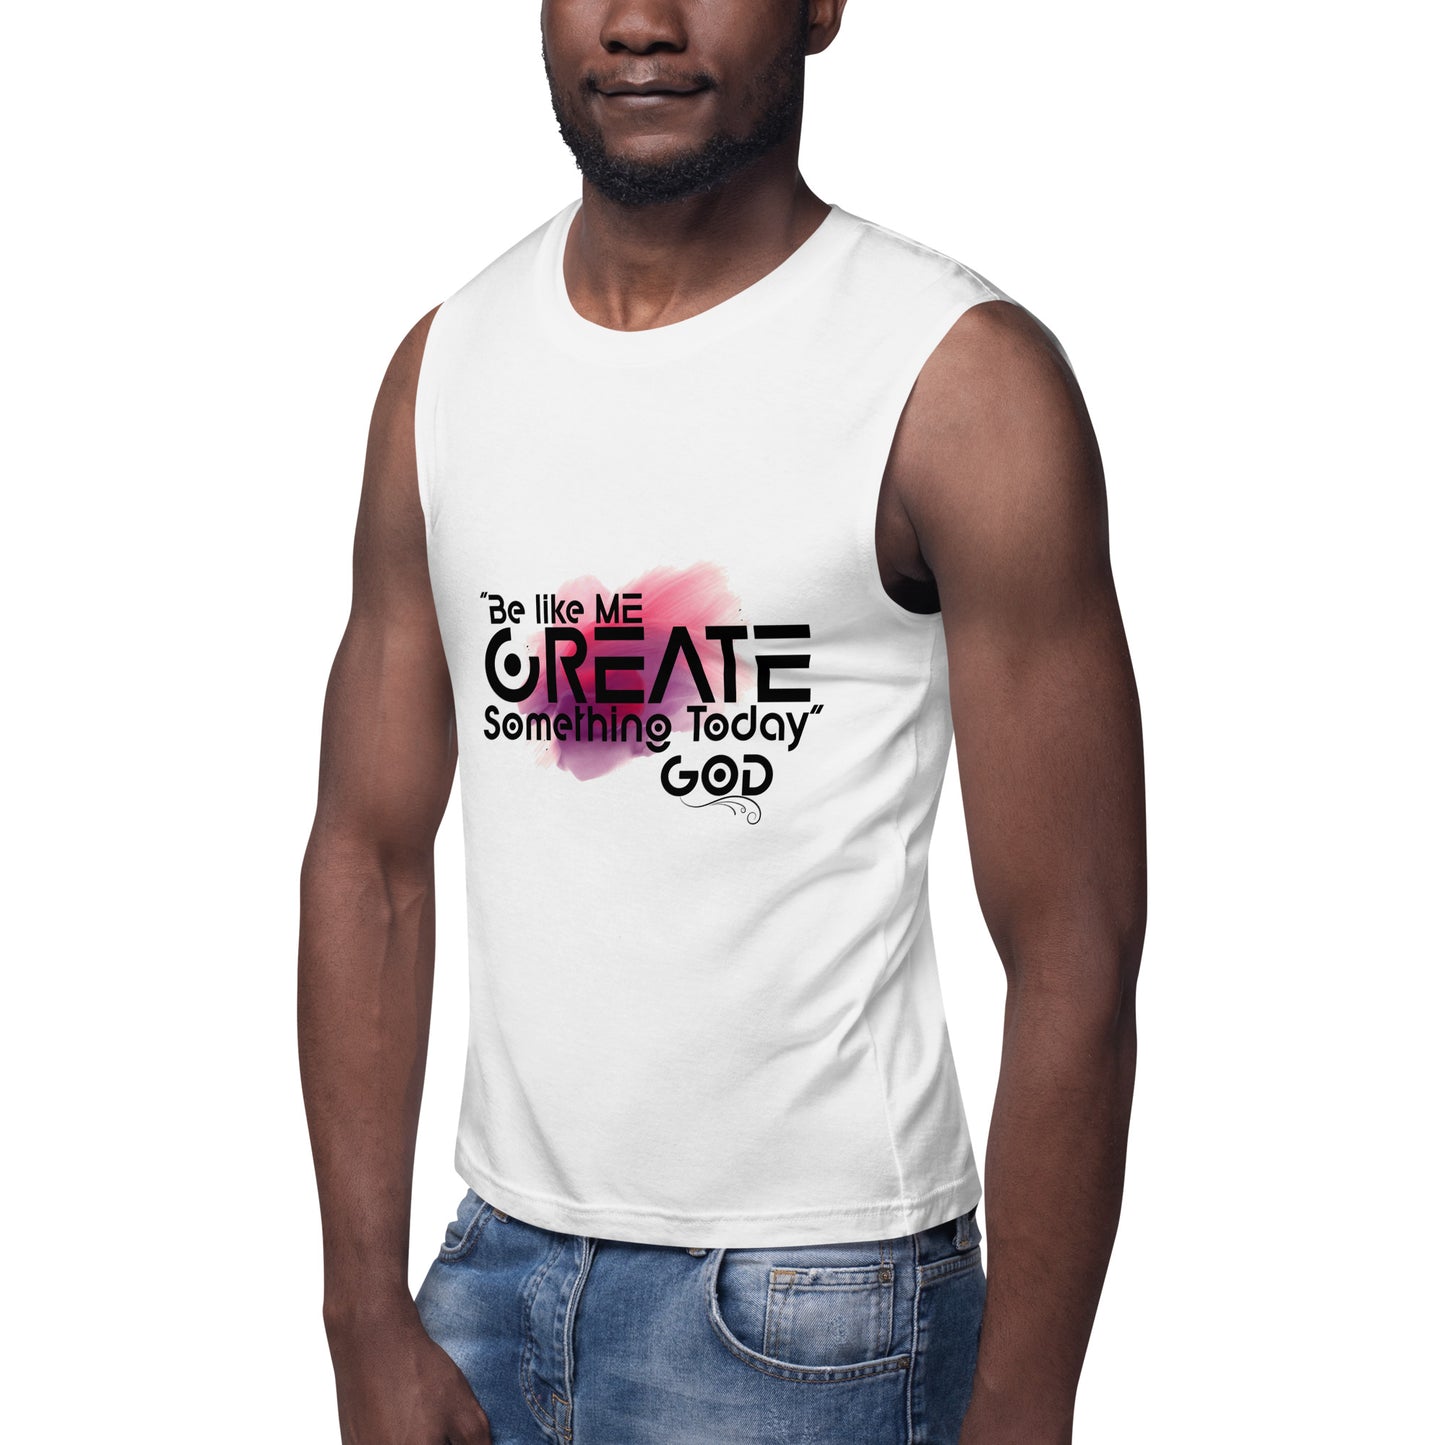 CREATE Muscle Shirt